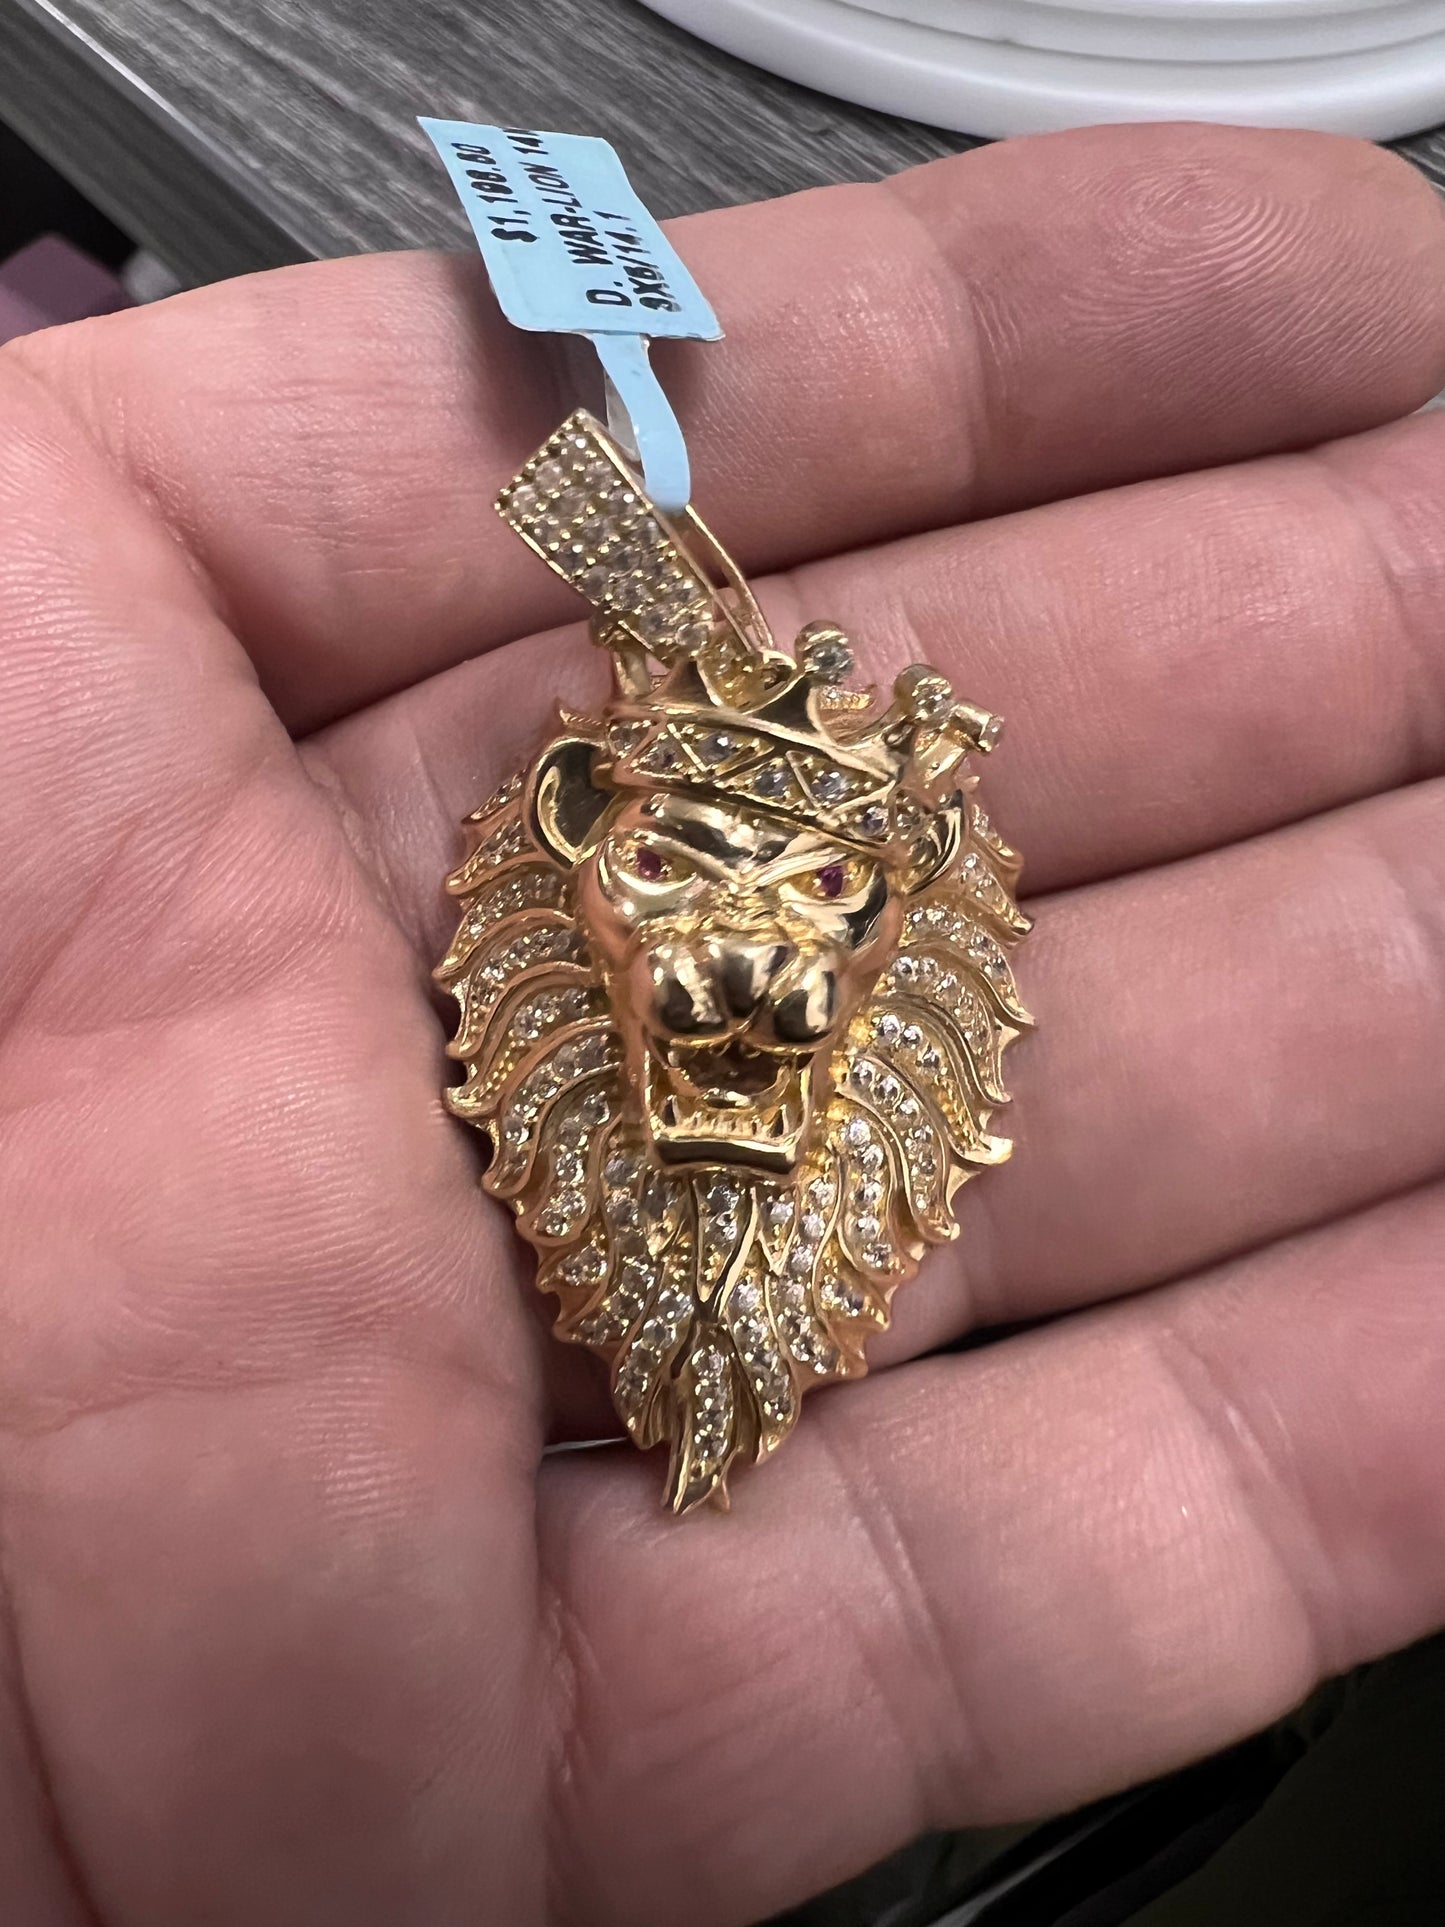 14K Yellow gold lion king pendant-317424